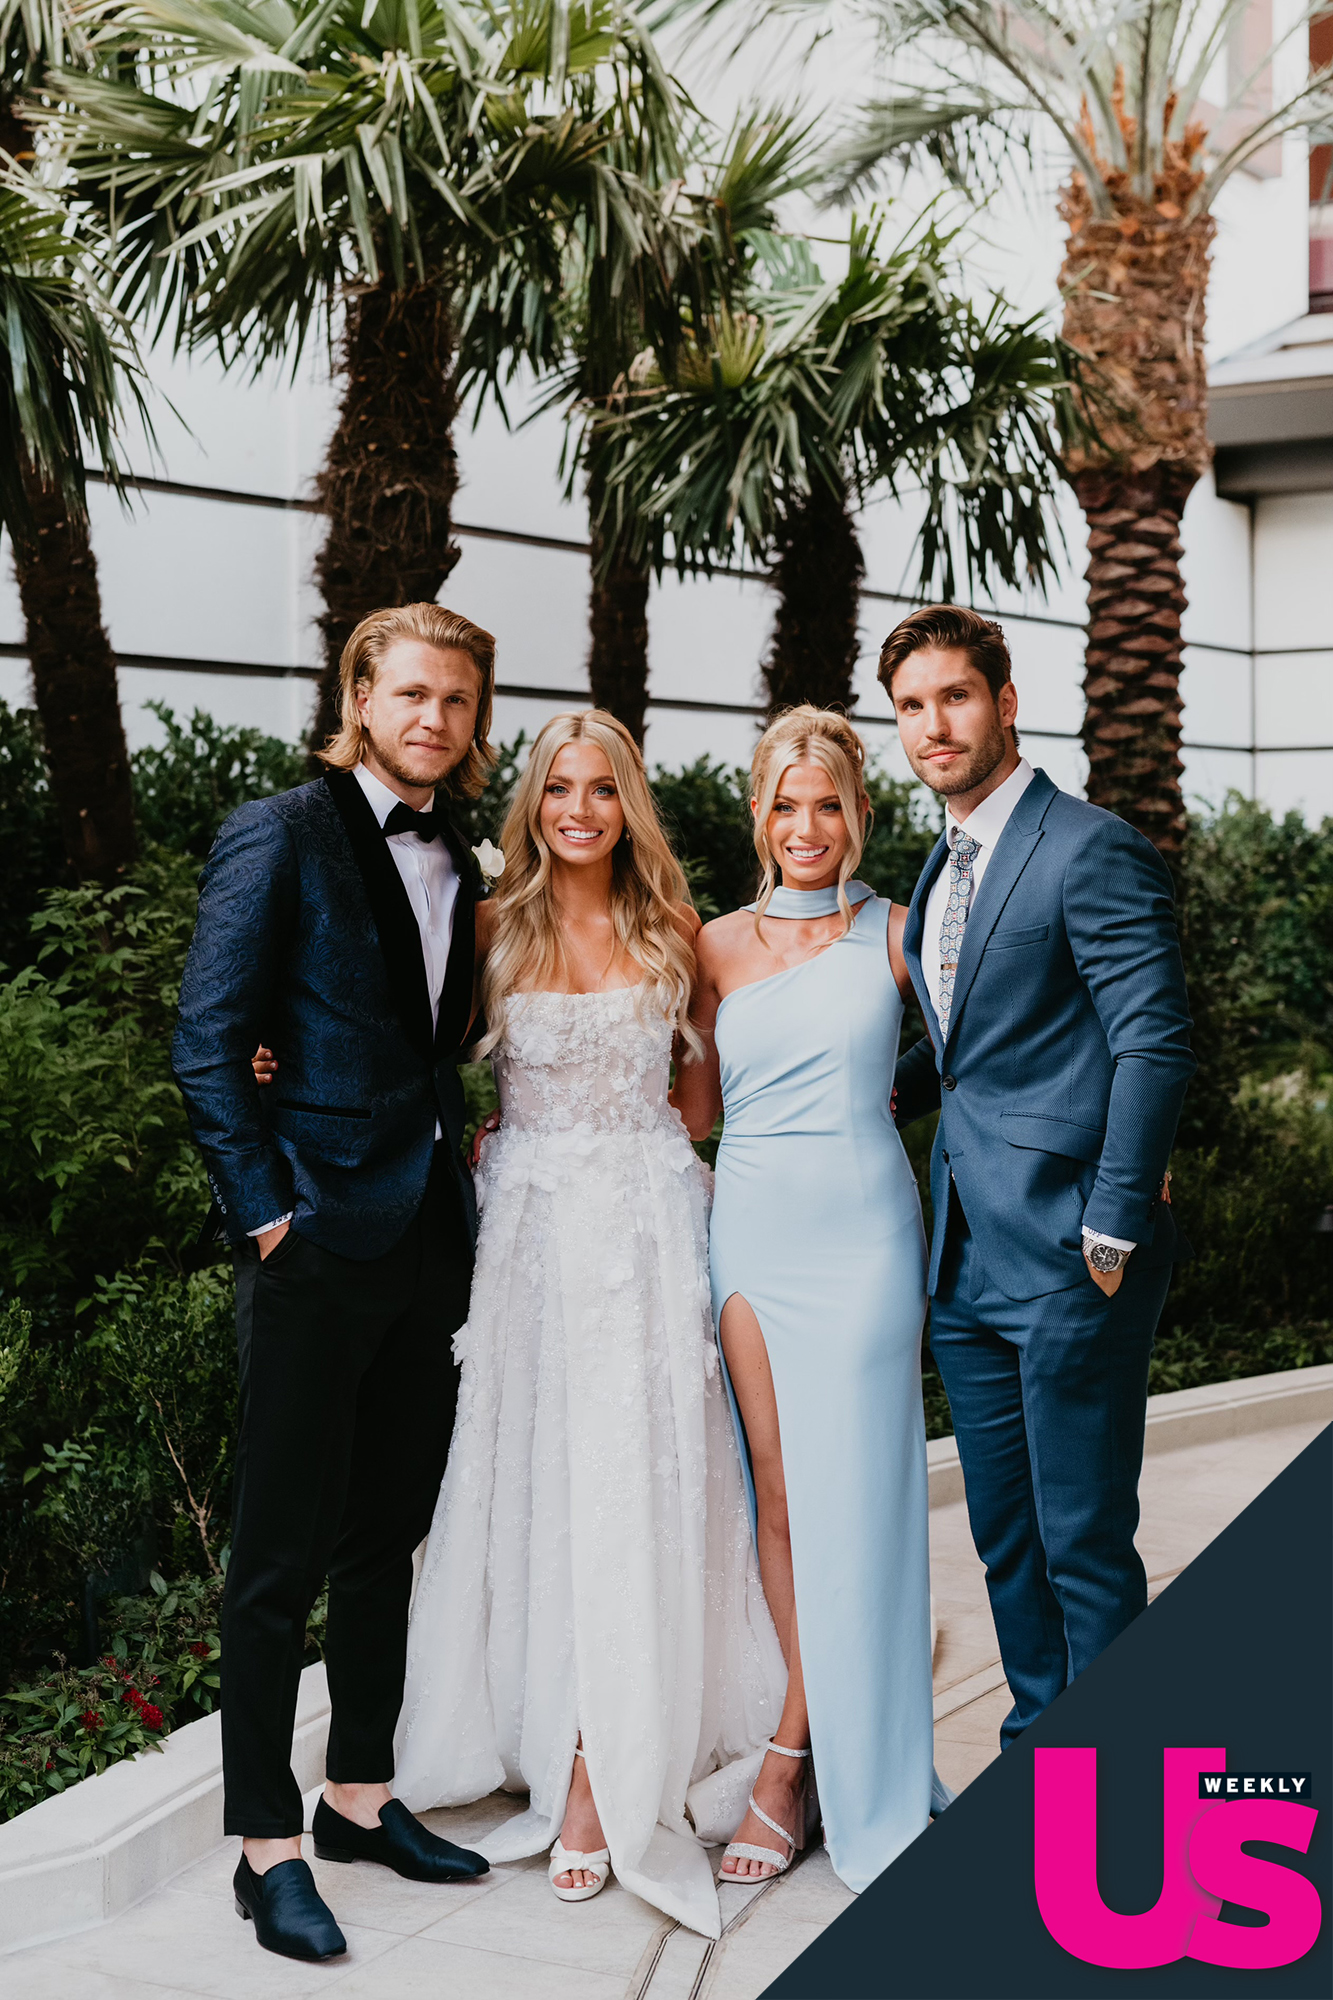 Emily Ferguson, William Karlsson married in Las Vegas, Kats, Entertainment